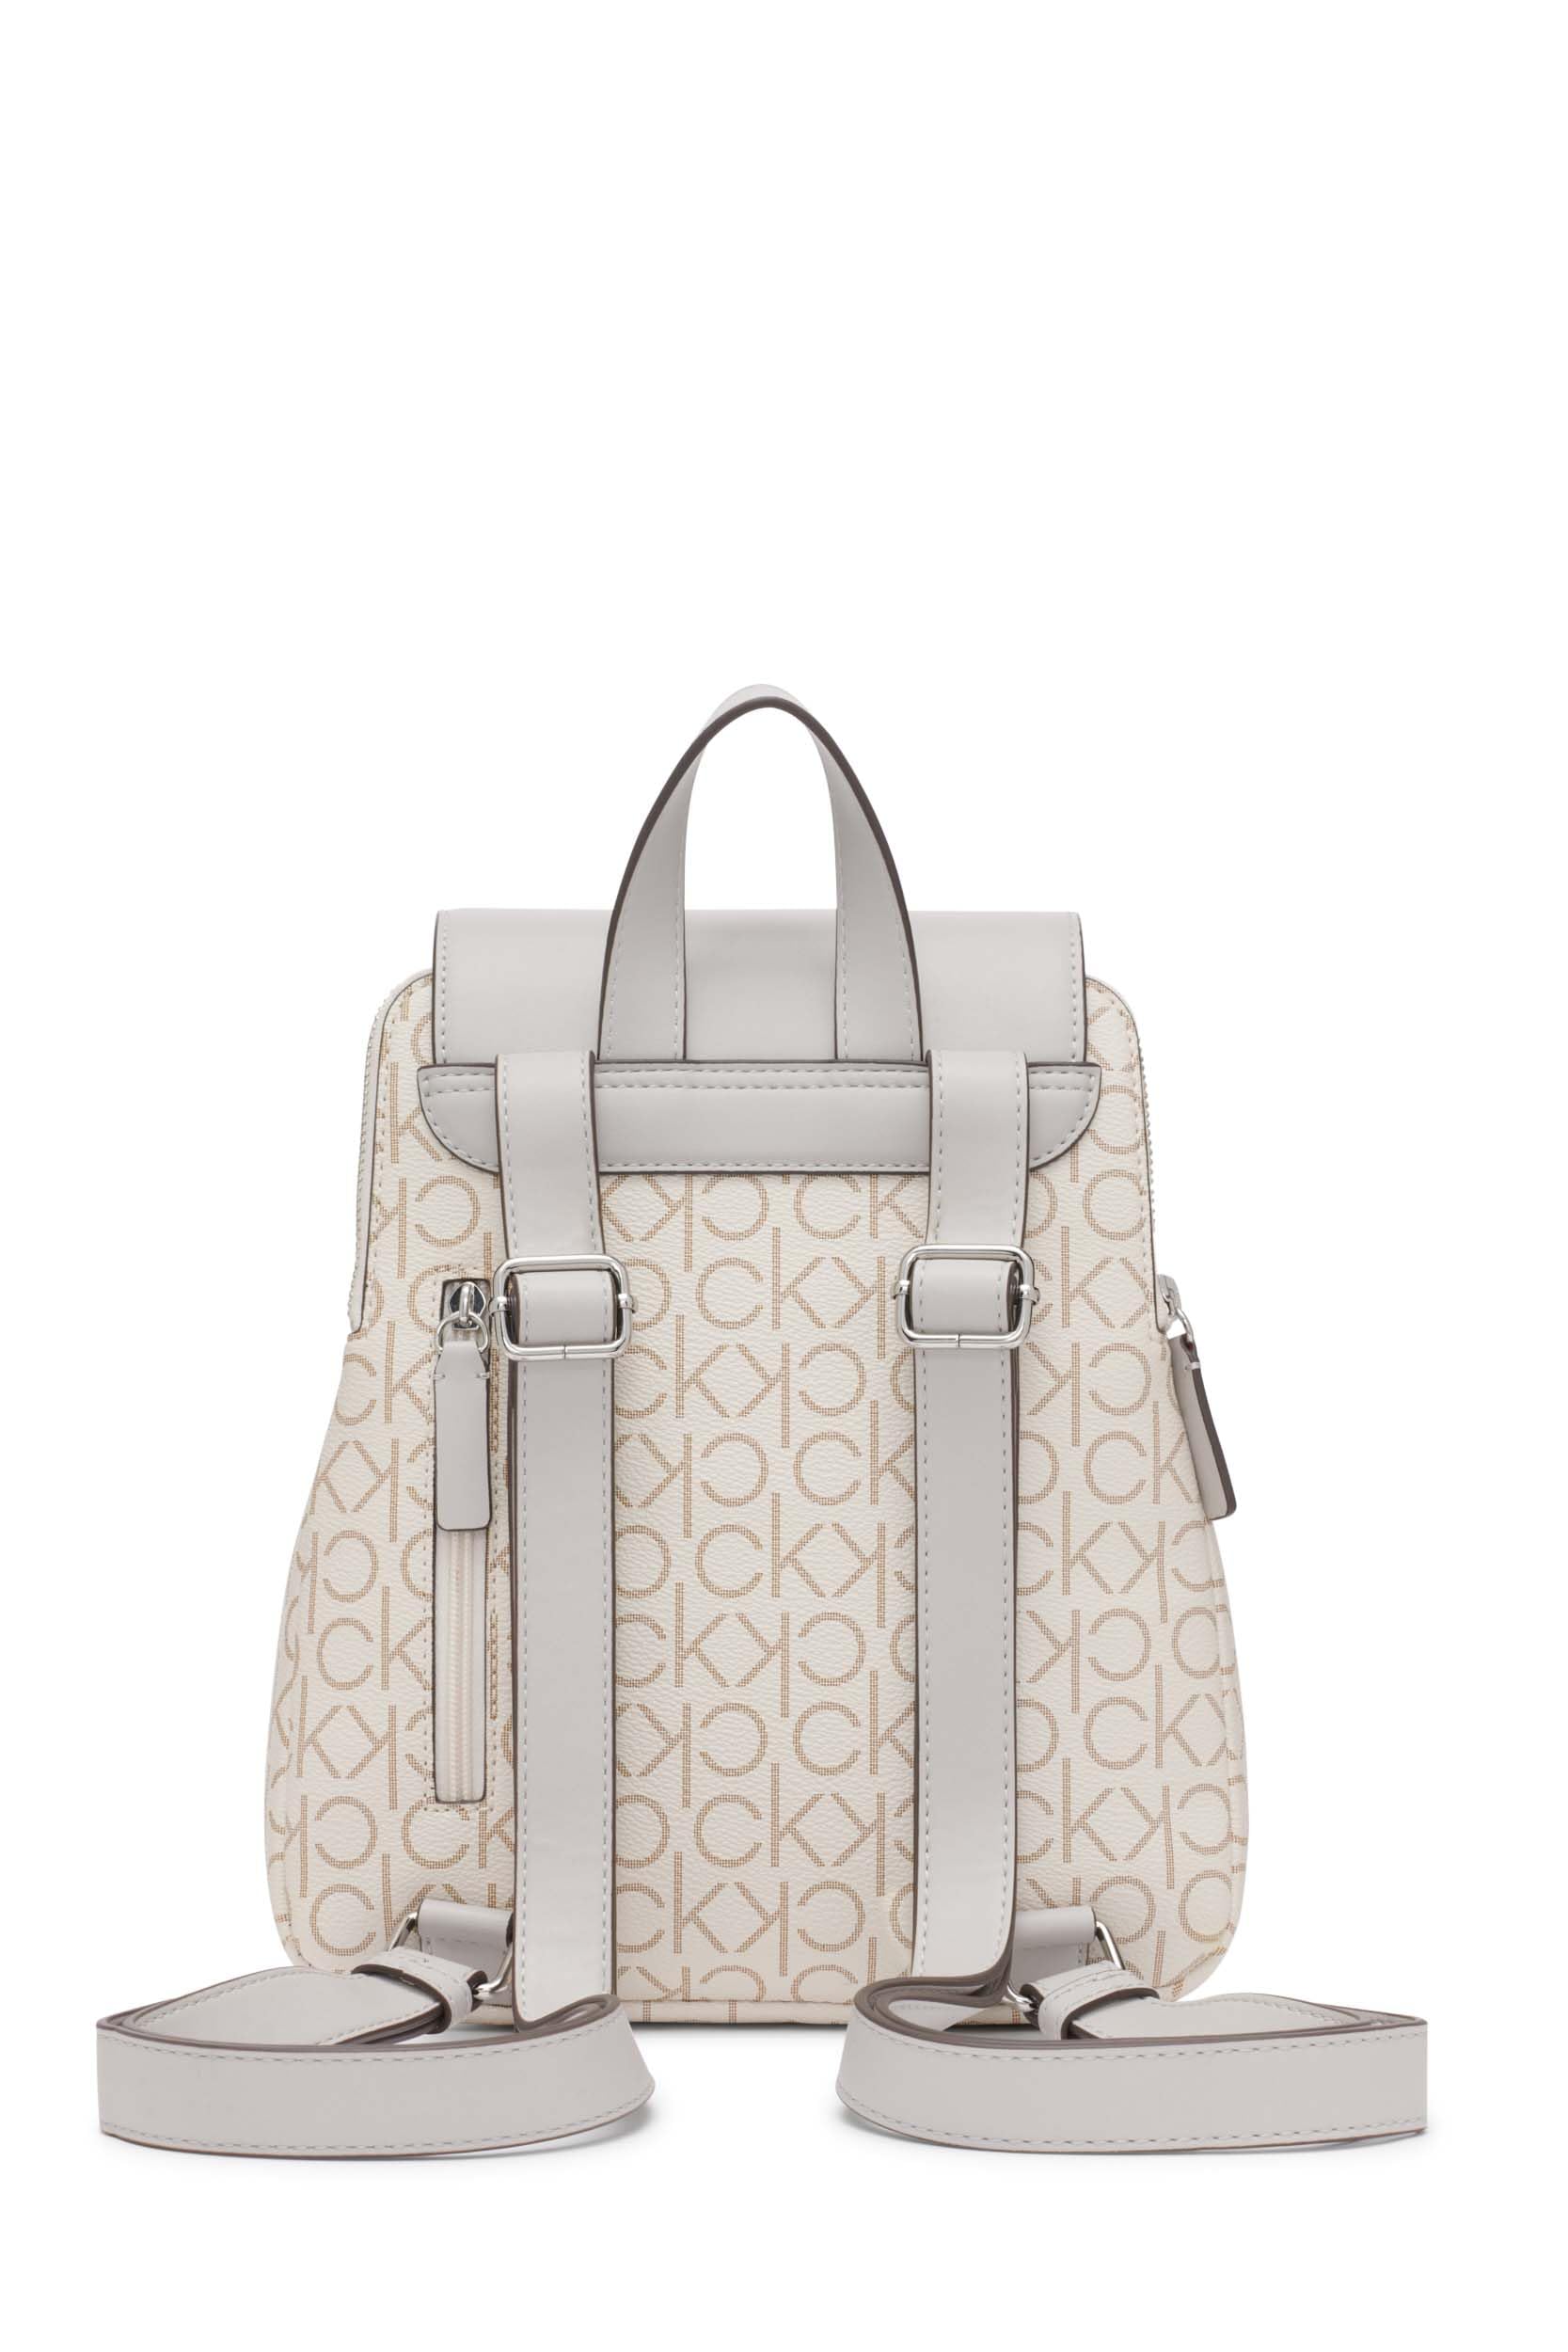 Calvin Klein Reyna Signature Key Item Flap Backpack, Vanilla/Khaki/Dove